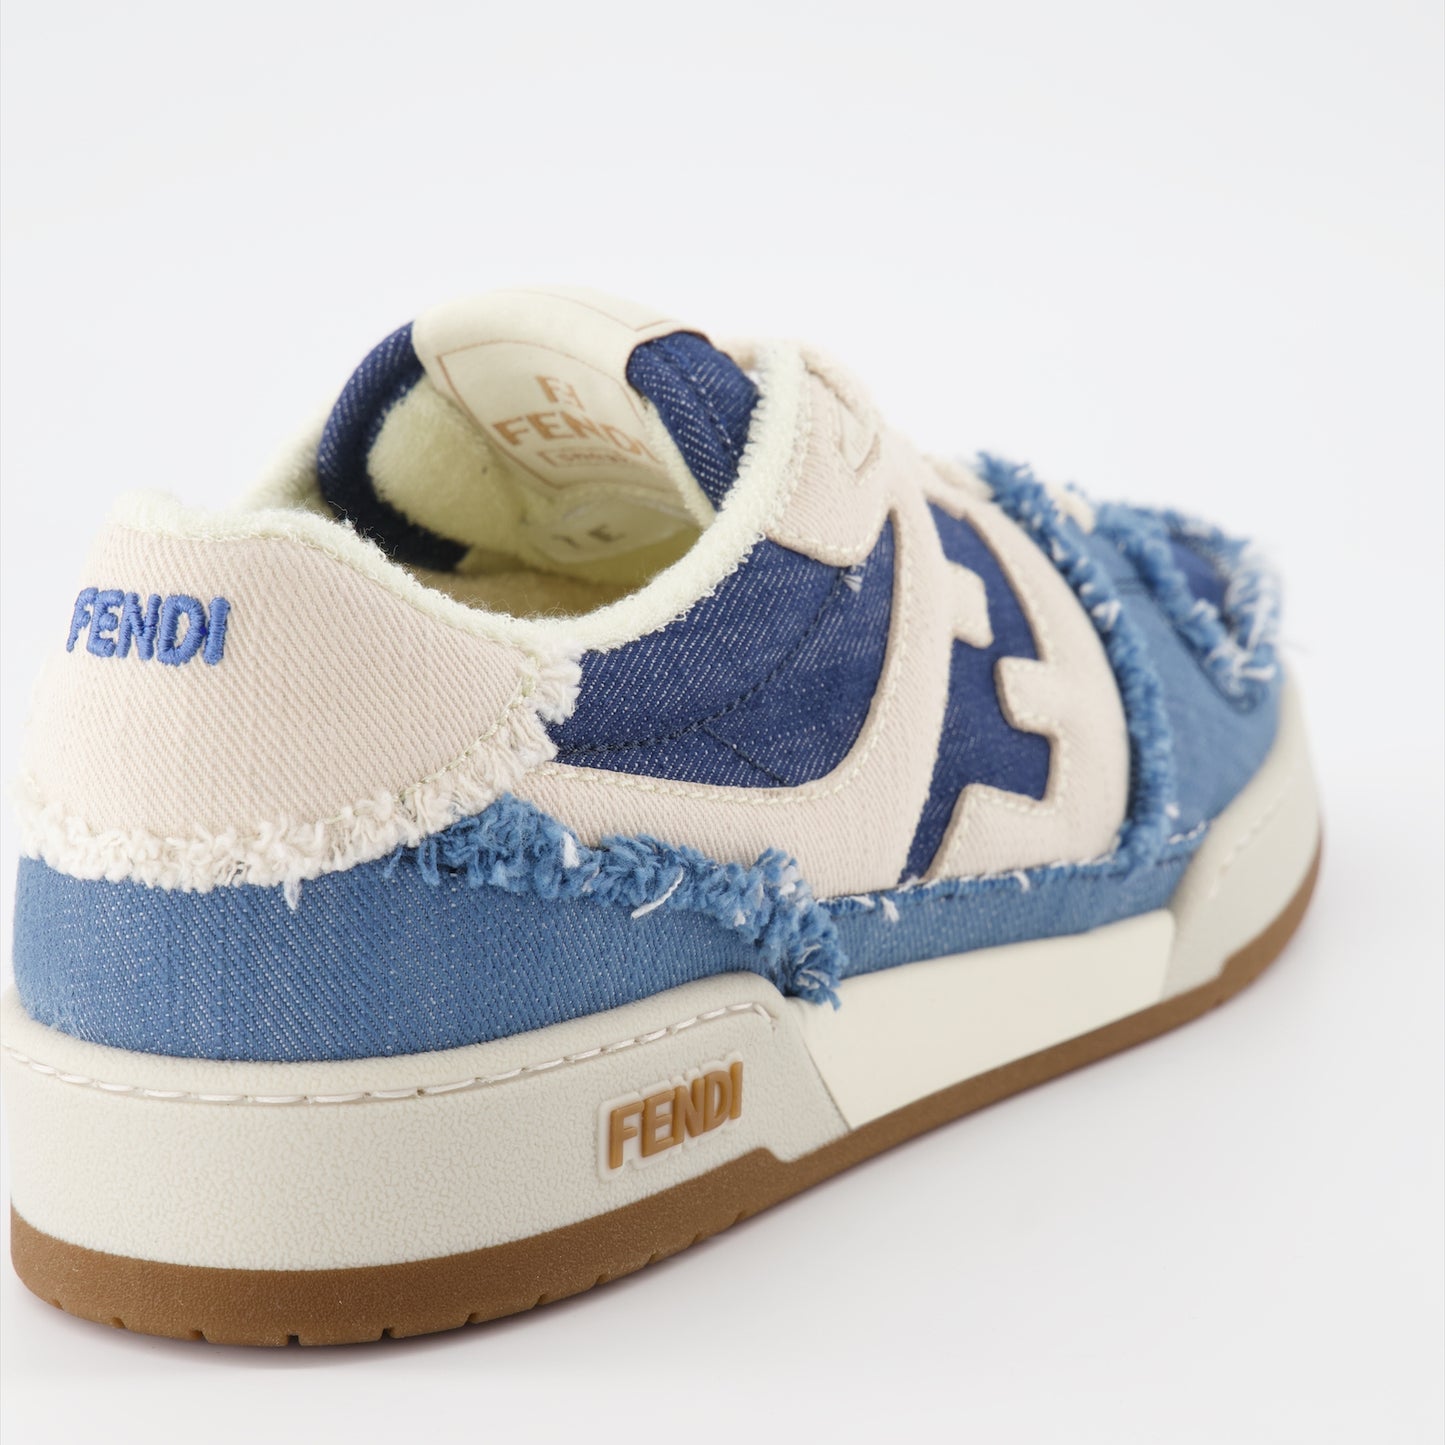 Fendi Match sneakers